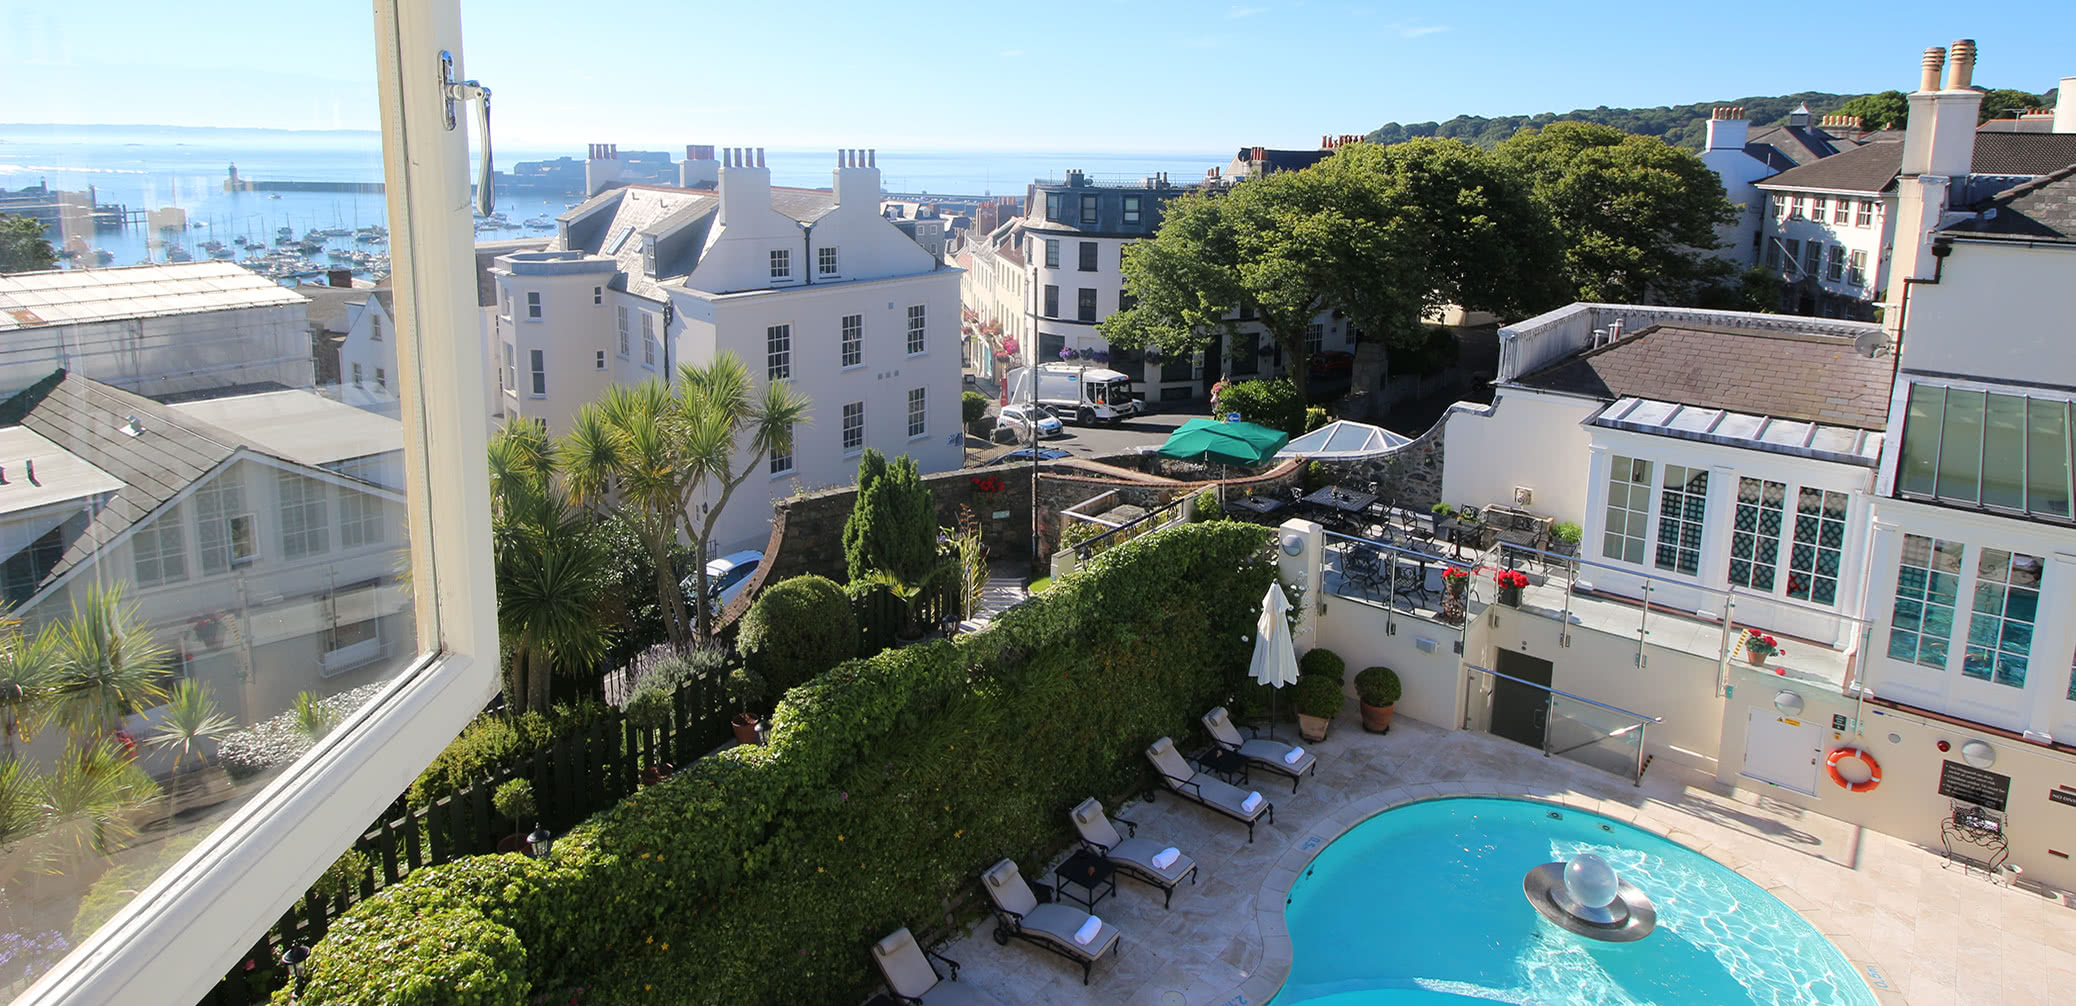 Top 10 Best Luxury Hotels In Guernsey